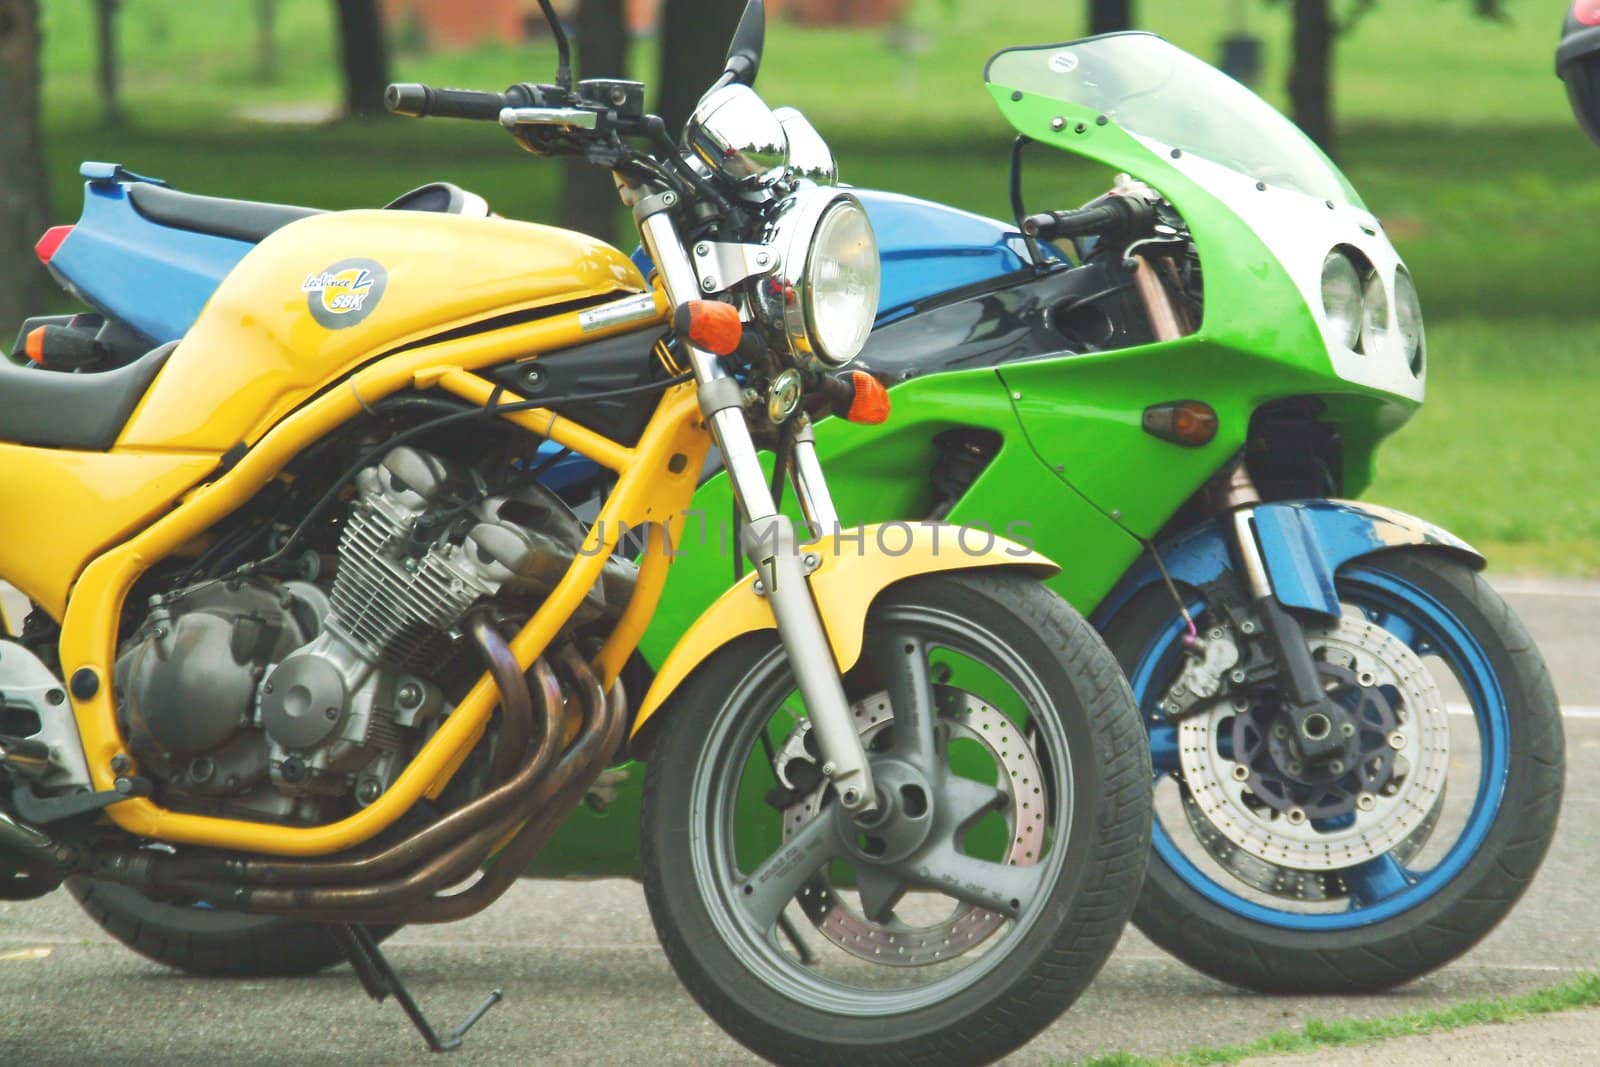 a pair of powerful motorbikes